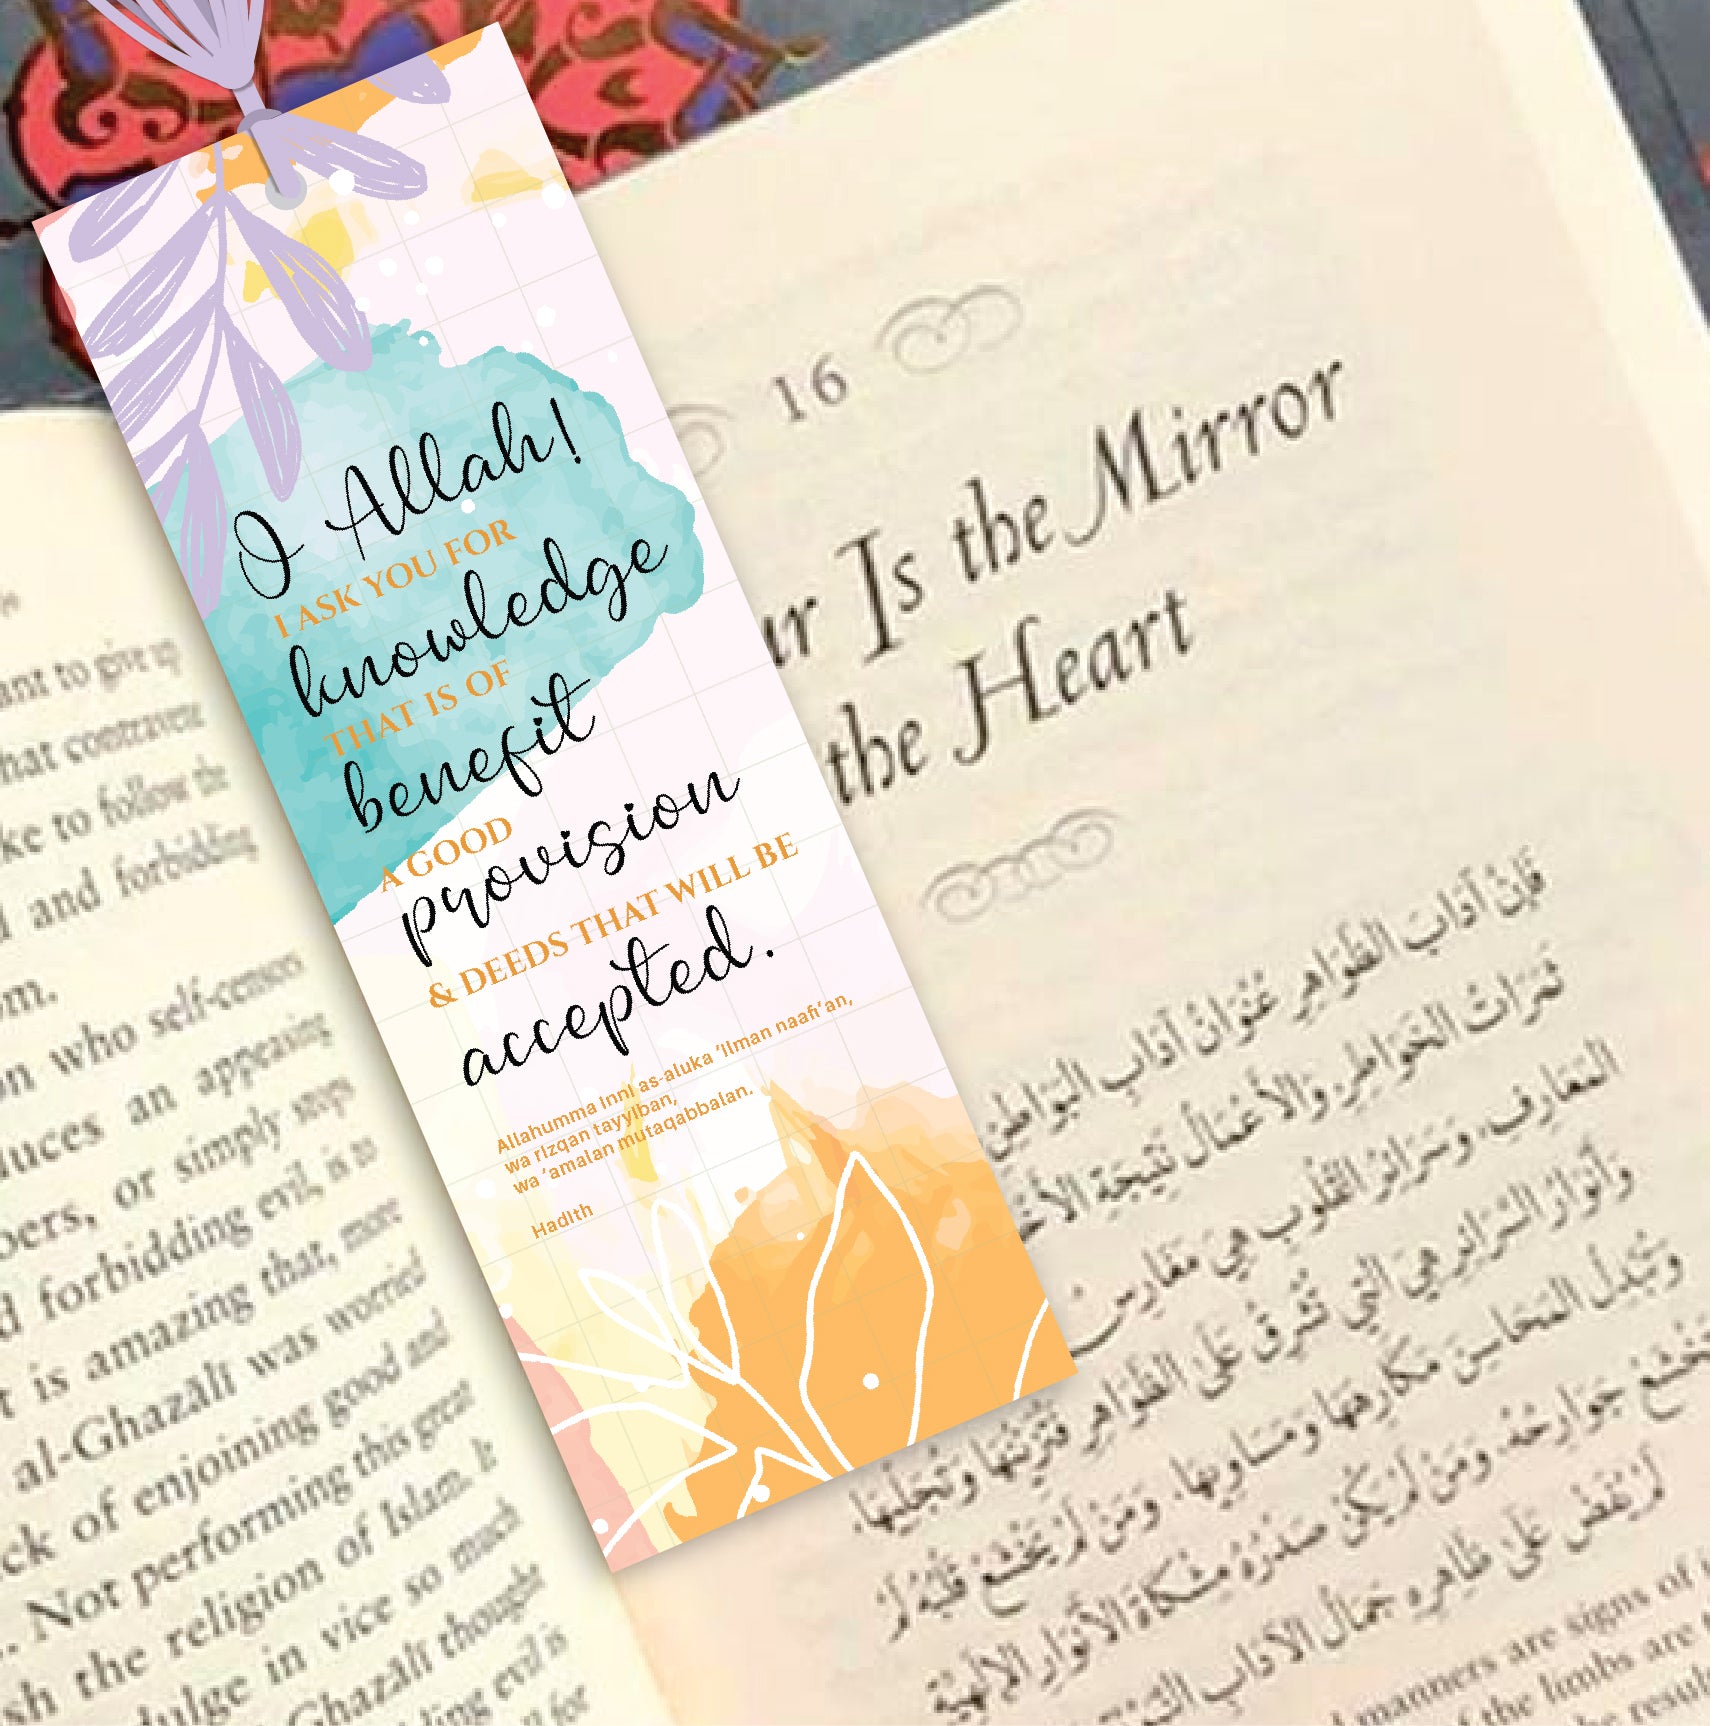 Islamic Bookmark Advance Me in Knowledge